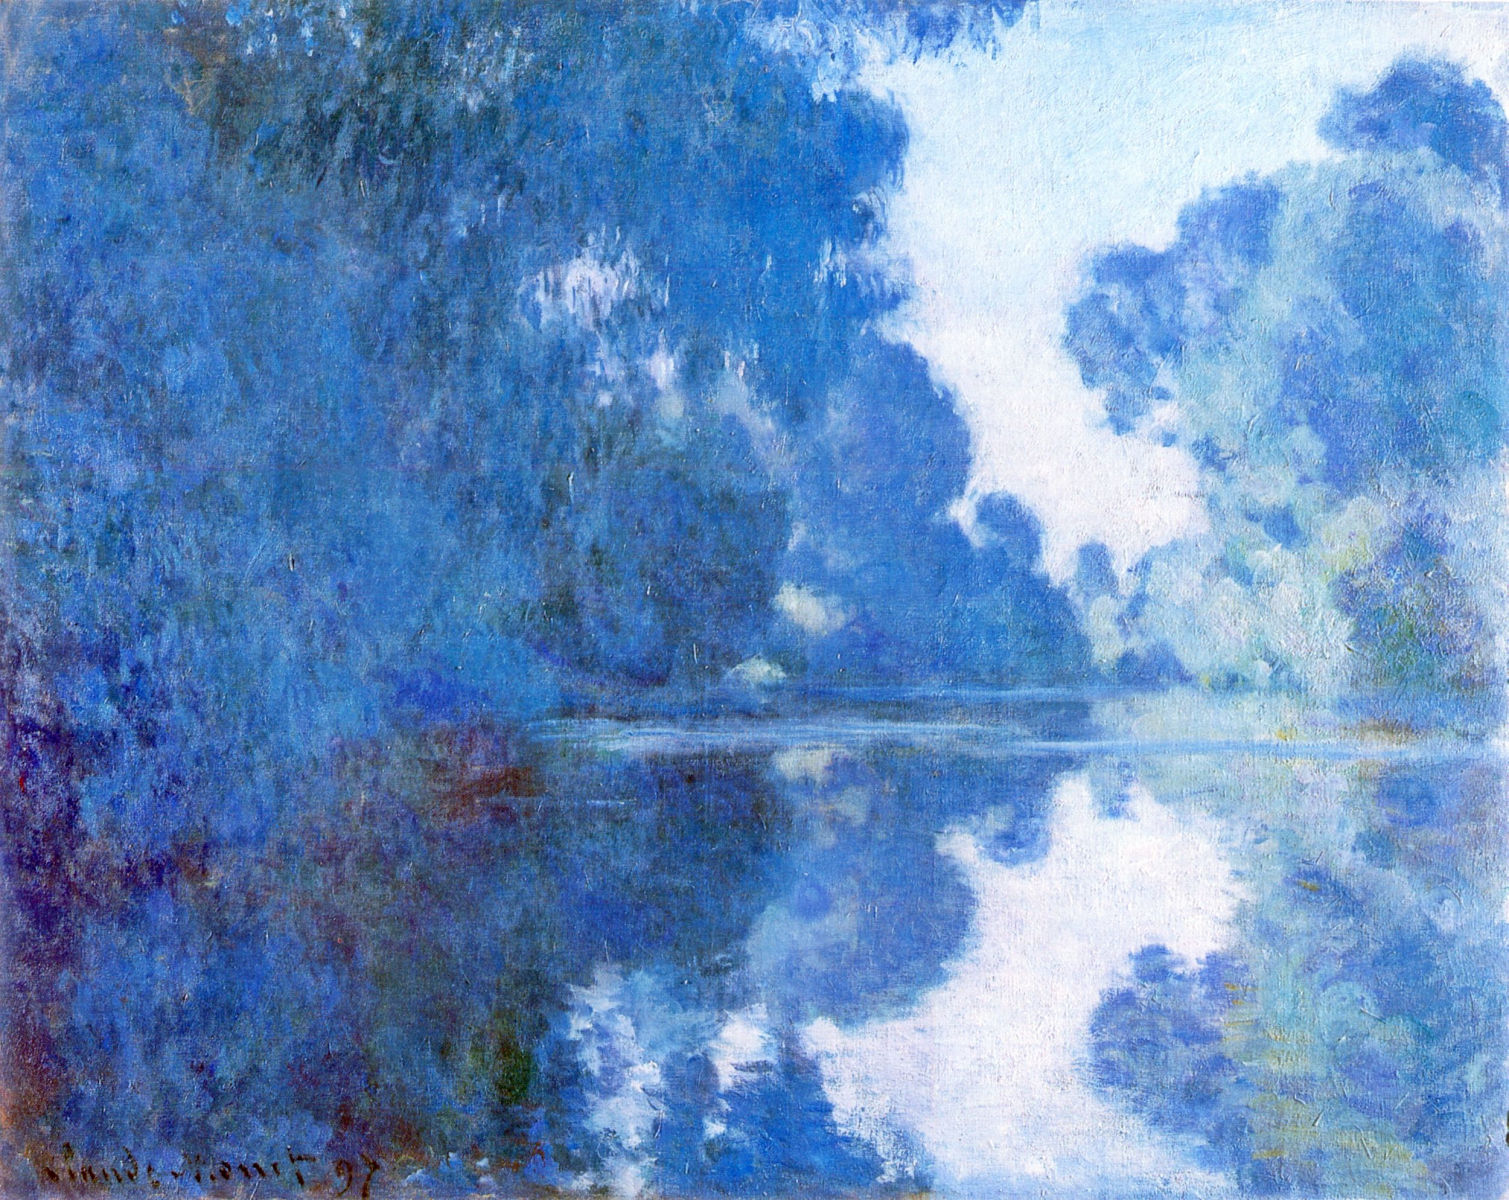 Claude+Monet-1840-1926 (537).jpg